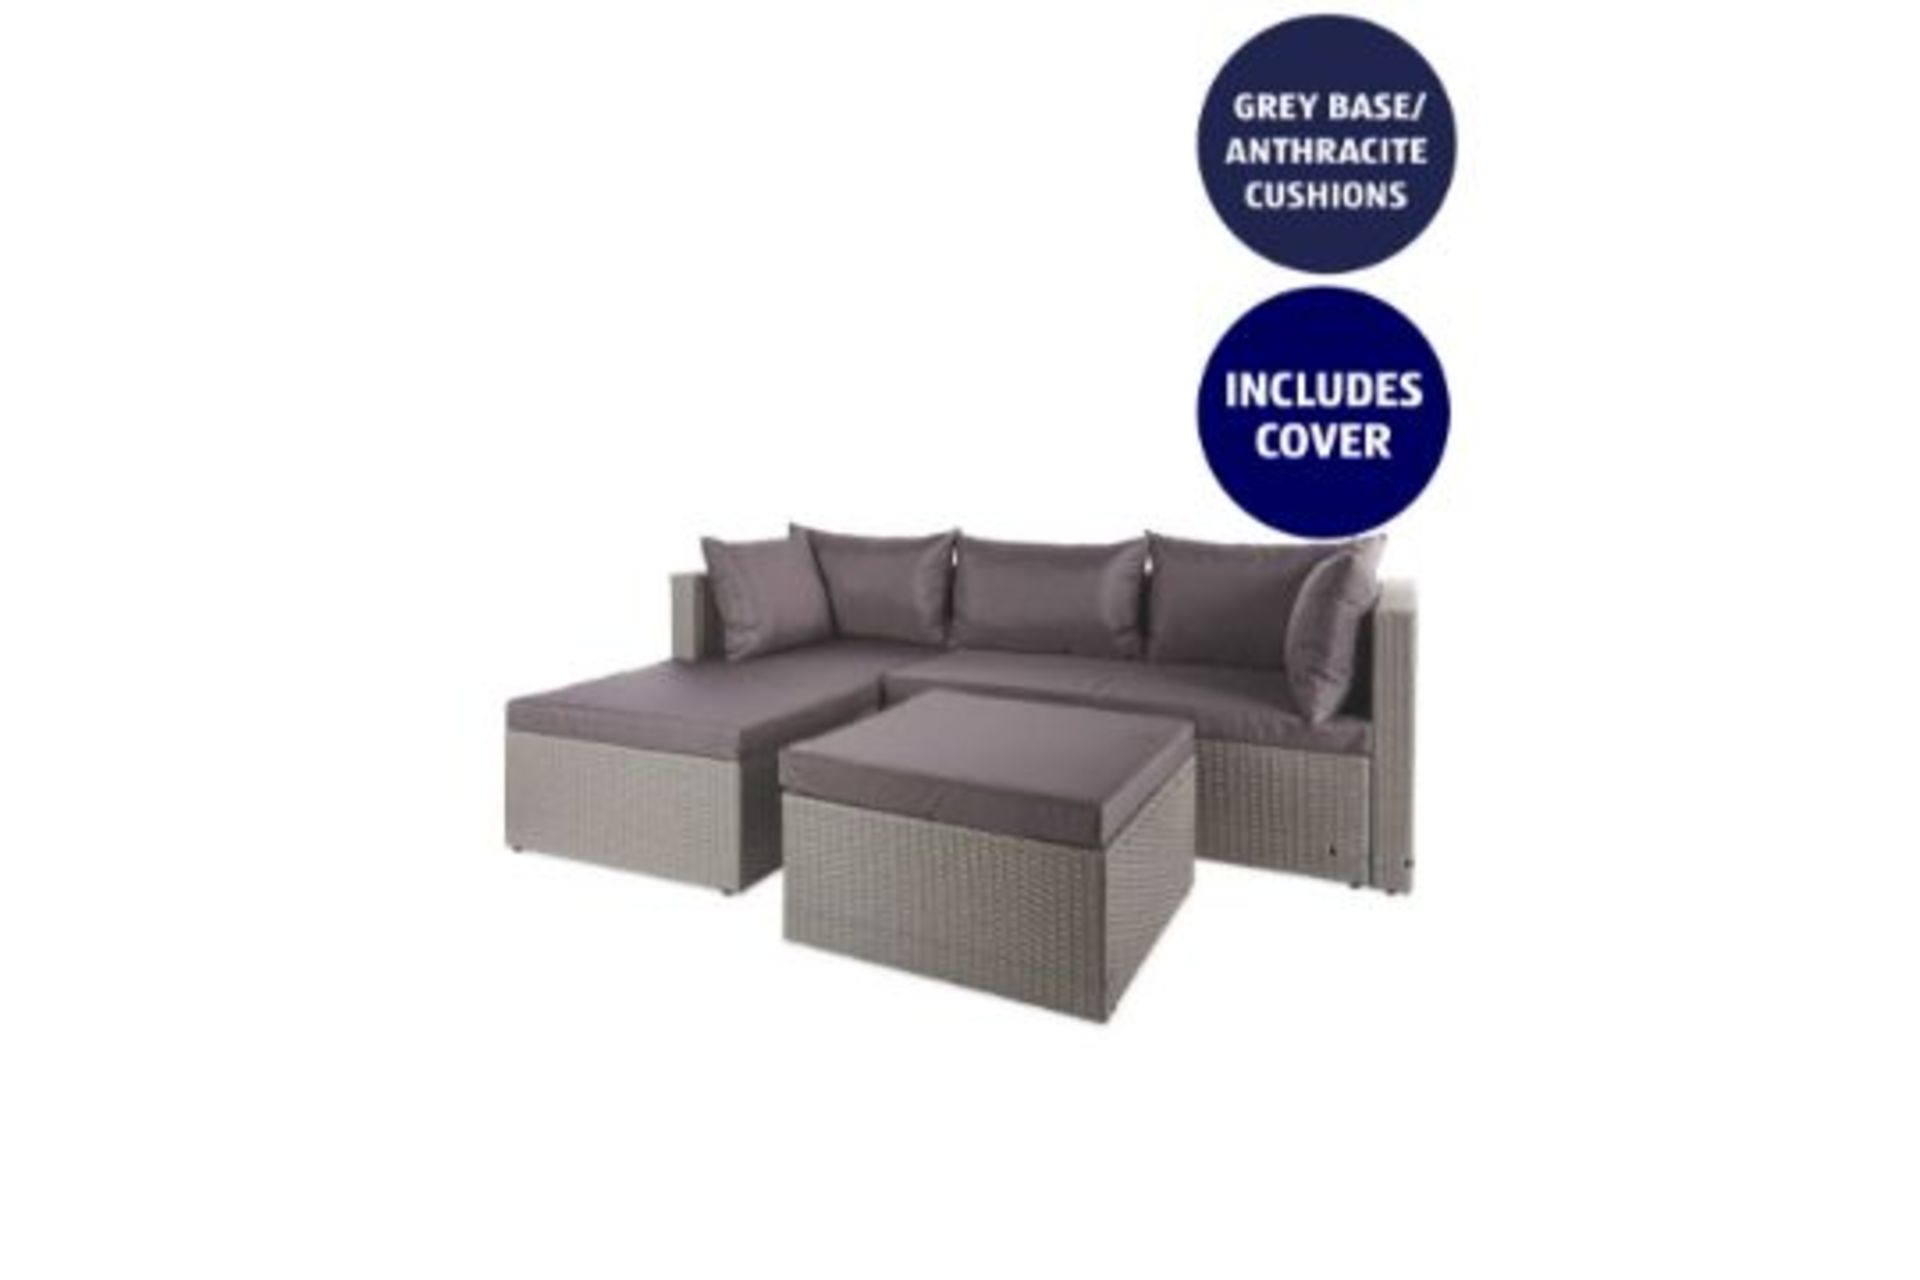 Luxury Rattan Corner Sofa Set. (ROW14). RRP £549.99. With quality weaving, rattan effect wicker